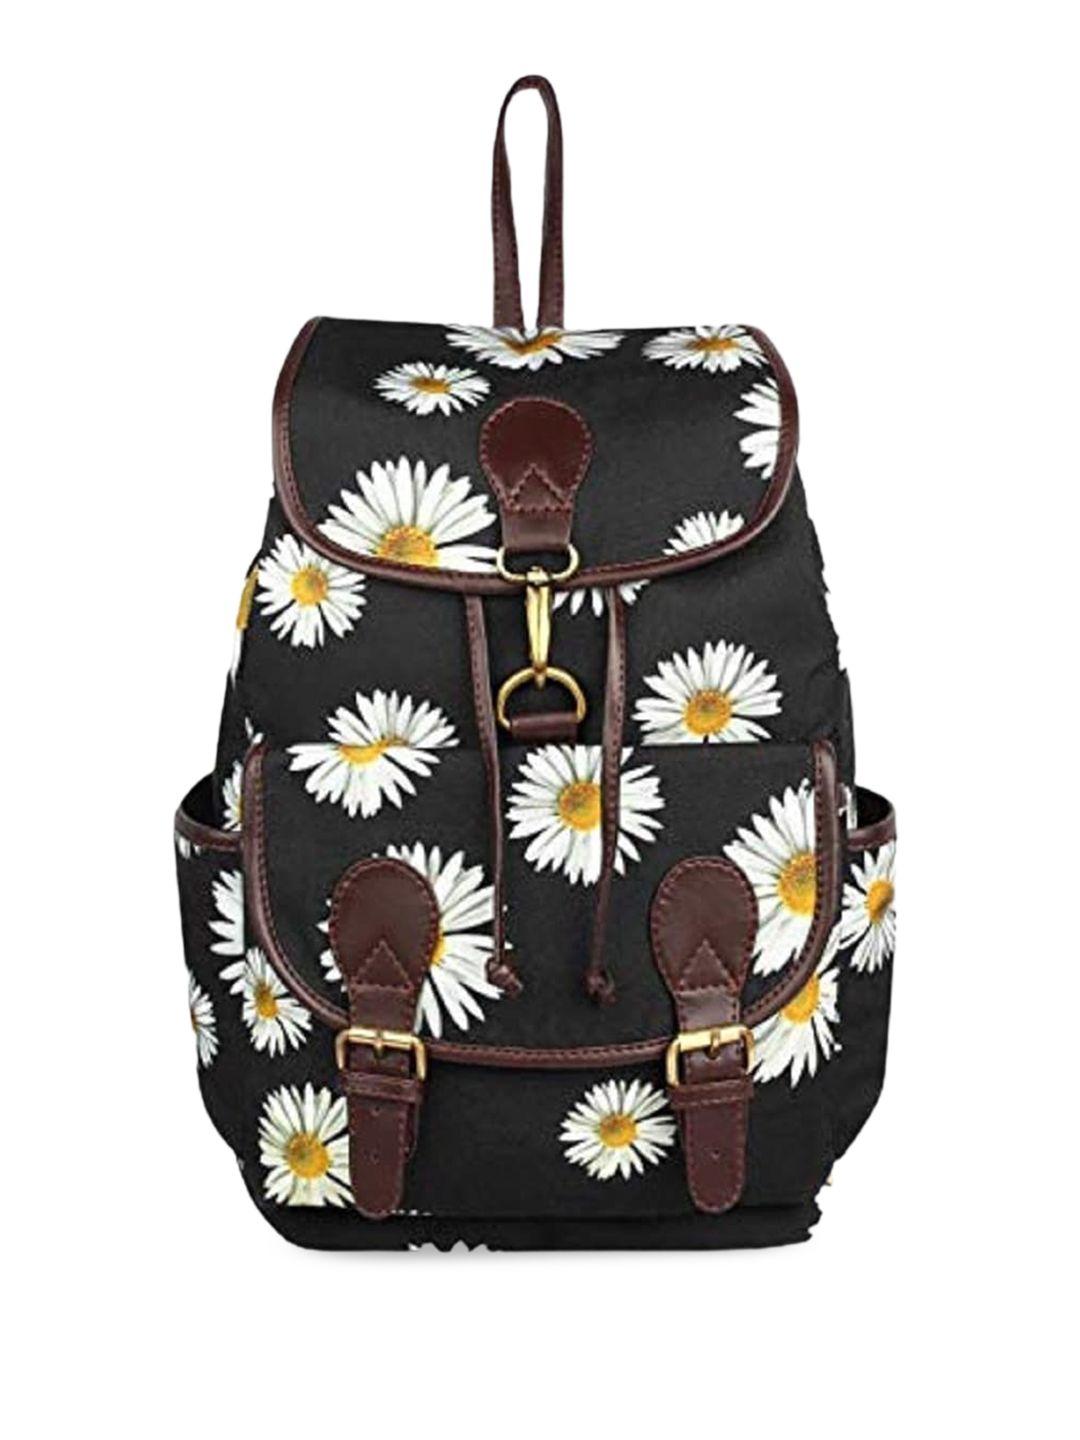 mast & harbour floral printed backpack